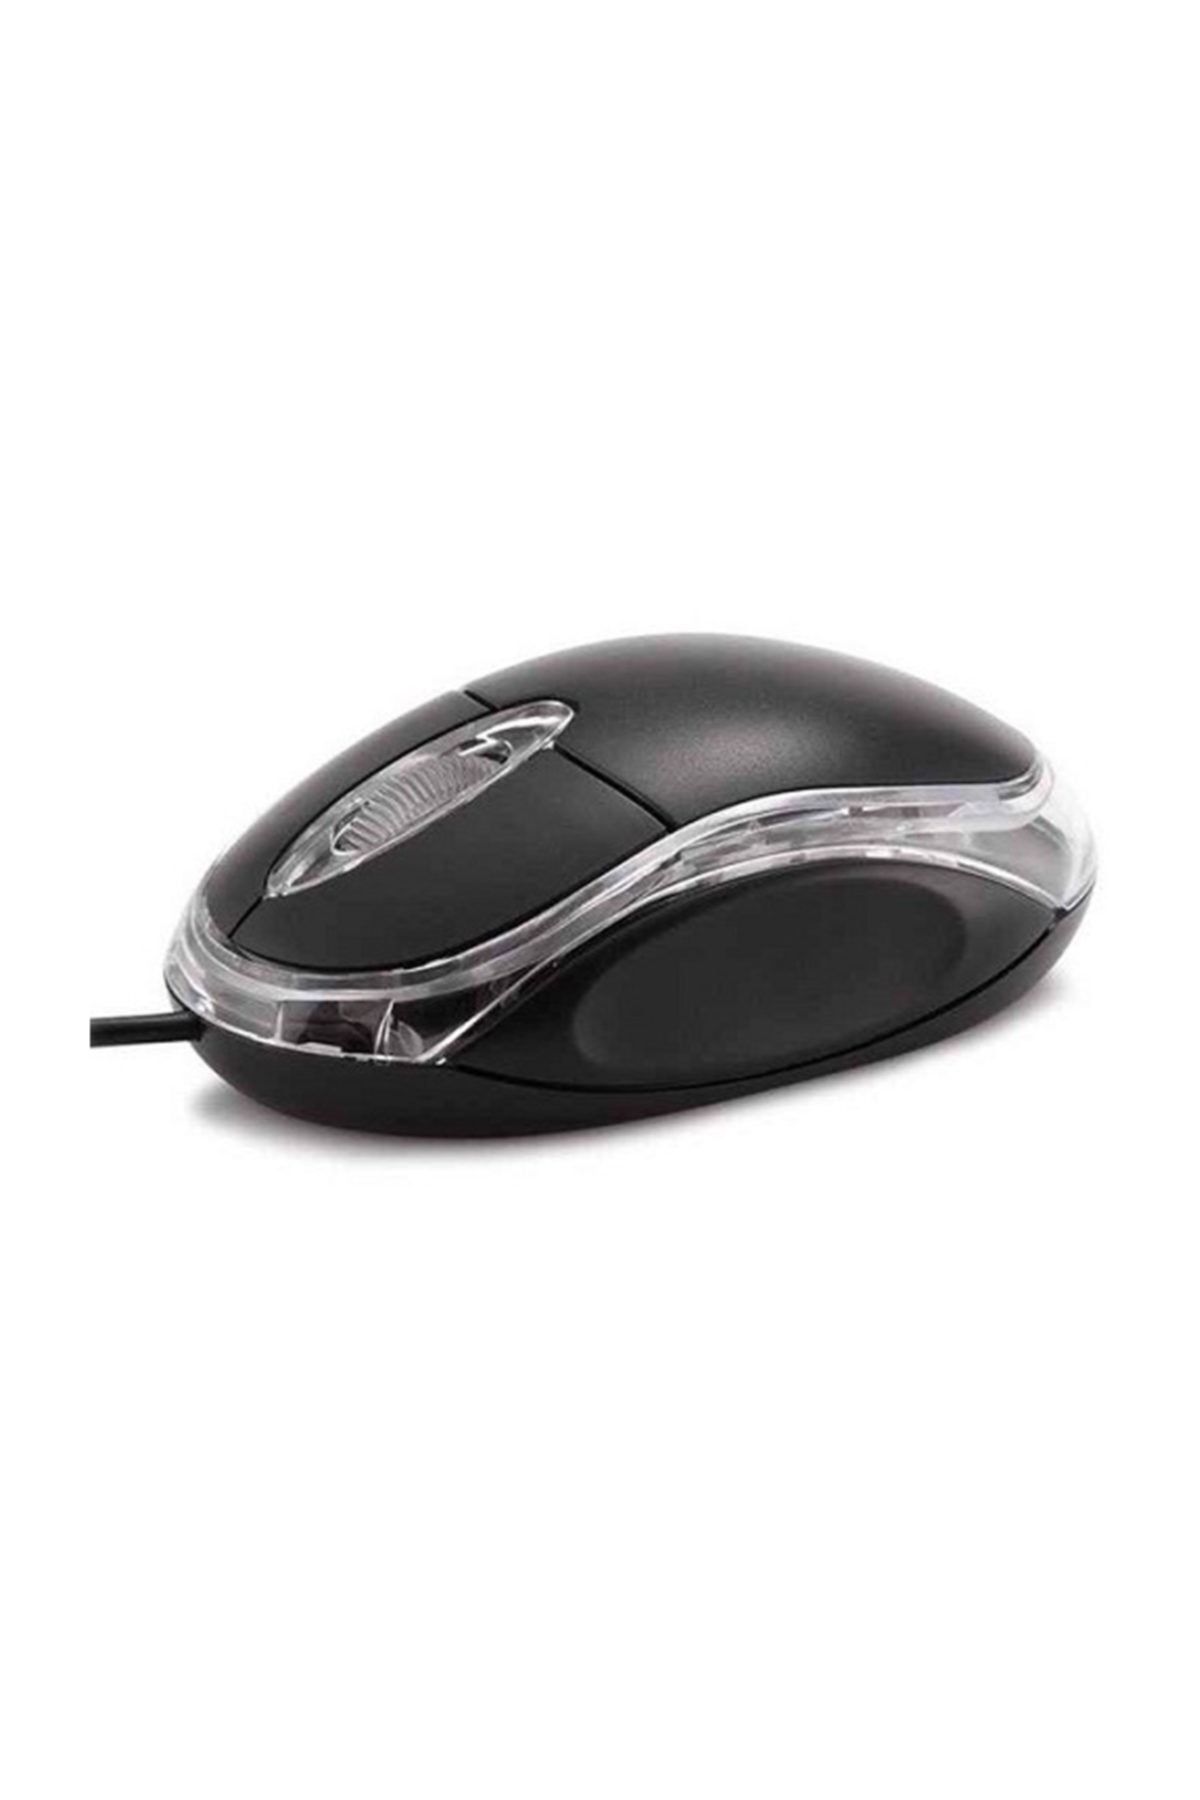 Hiper Hıper M-330 Optık Mouse Usb Siyah